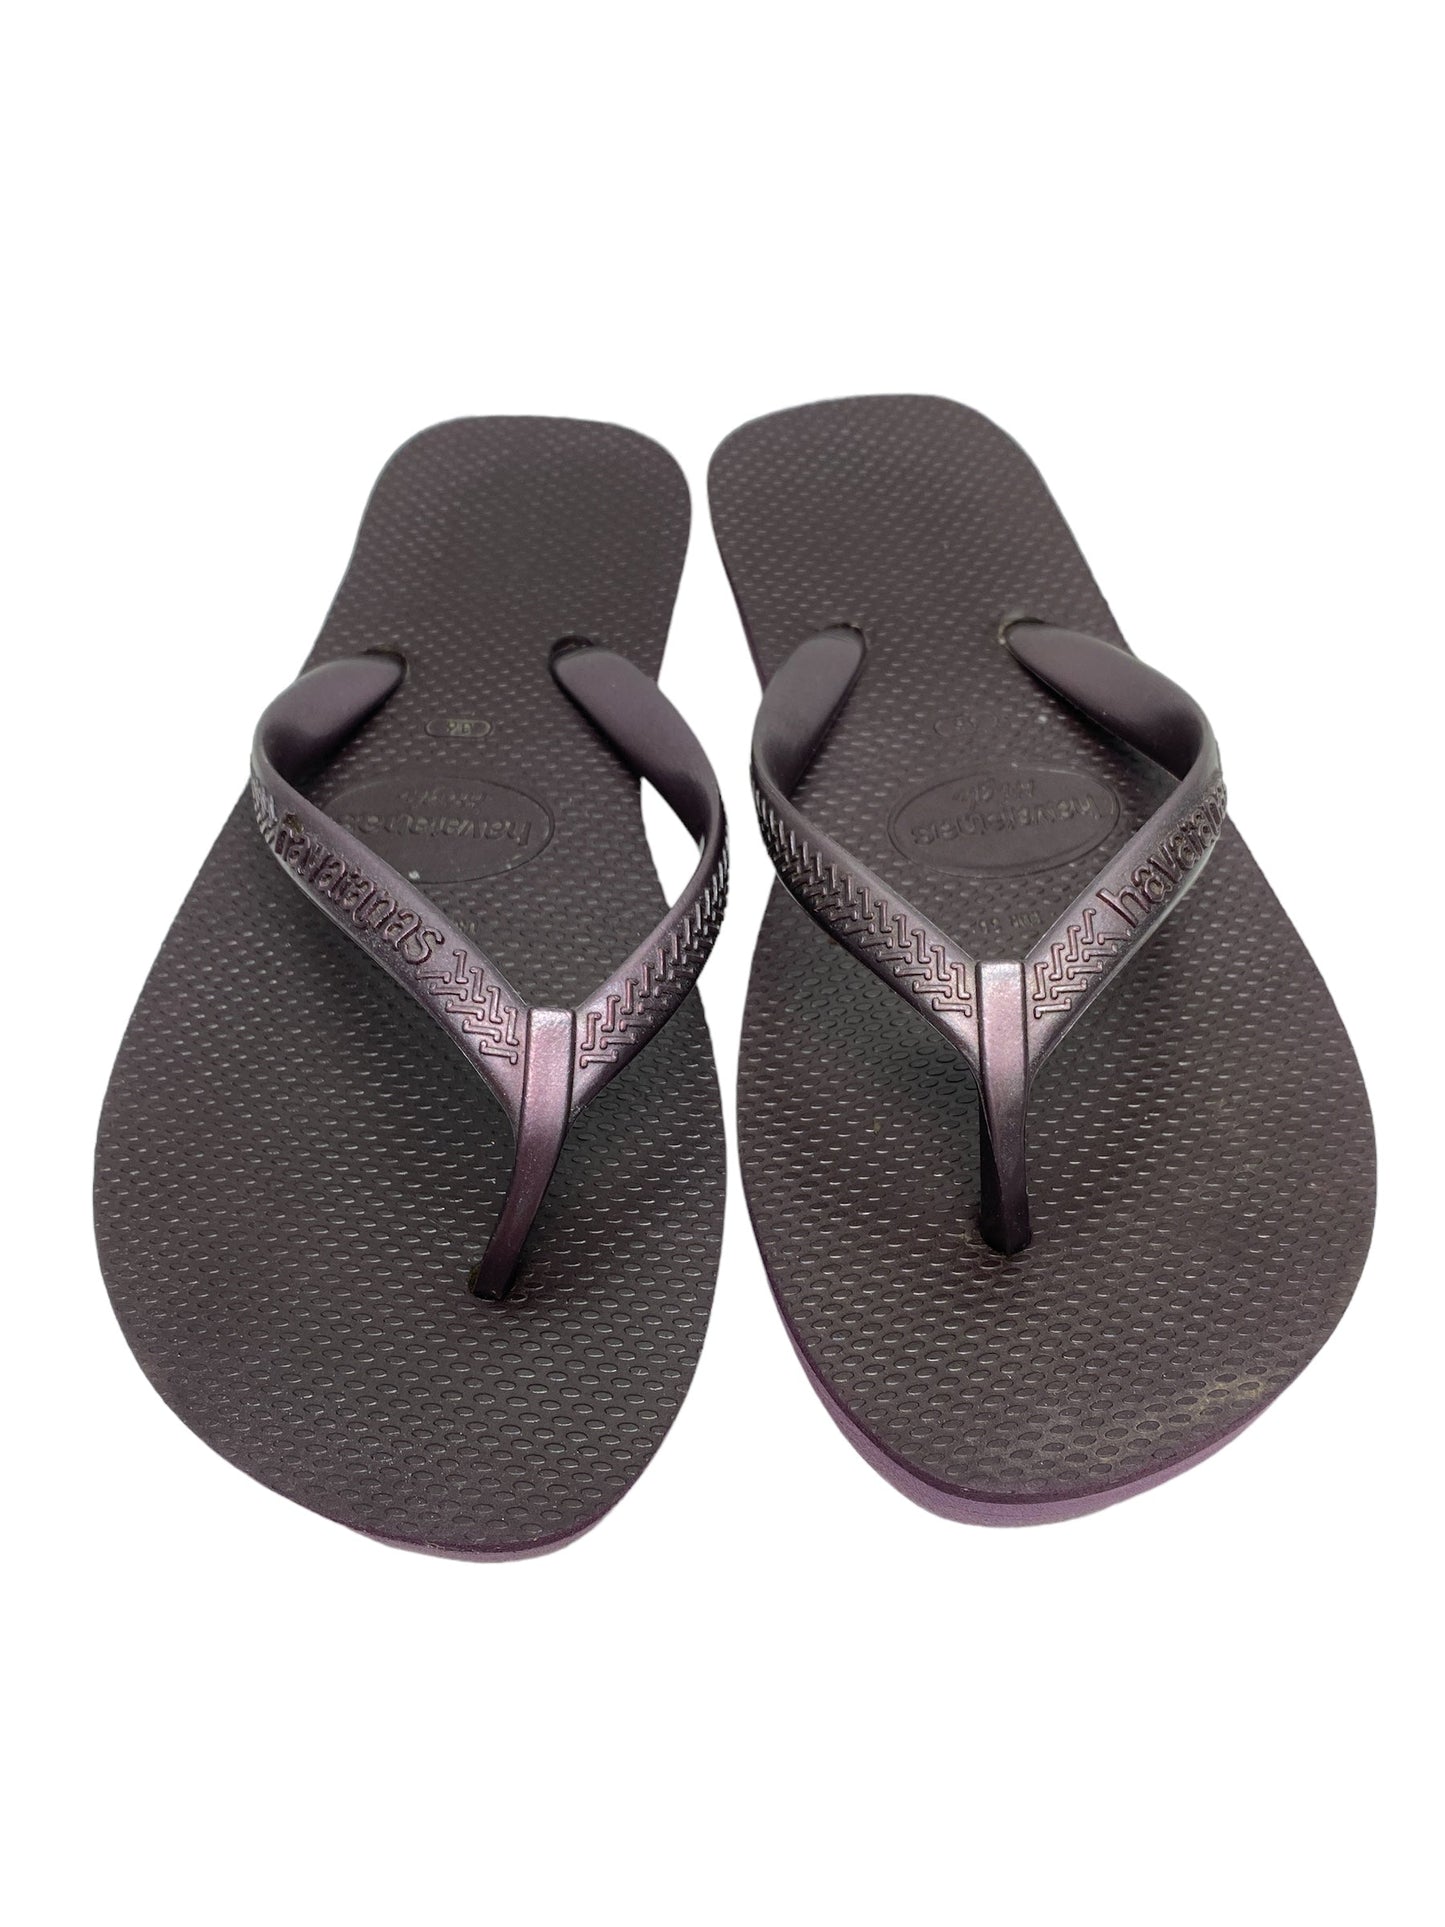 Sandals Flip Flops By Havaianas  Size: 6